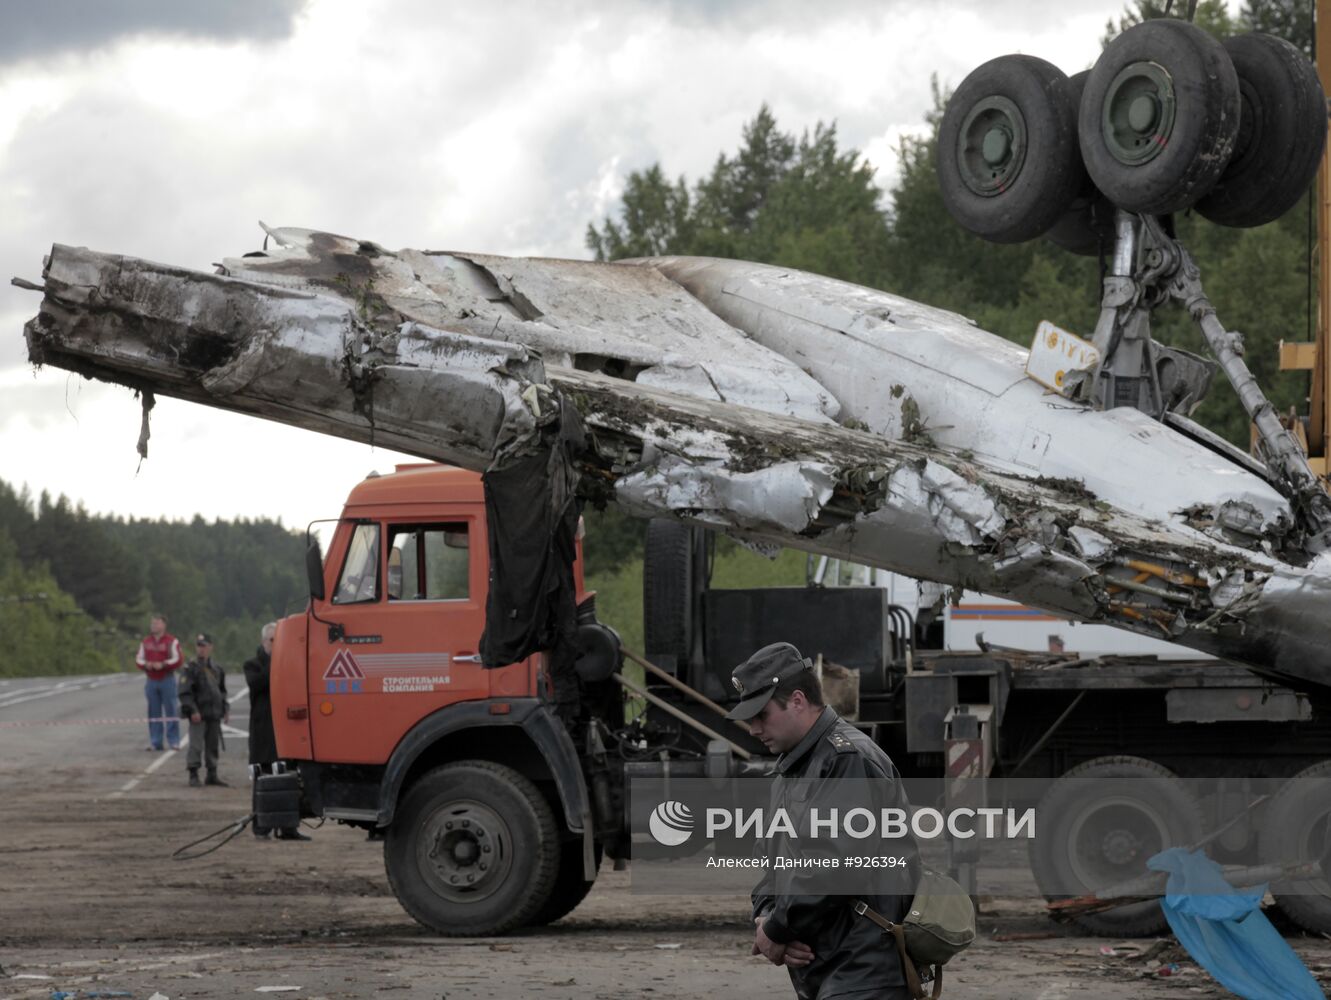 Ситуация на месте катастрофы самолета Ту-134 в Карелии